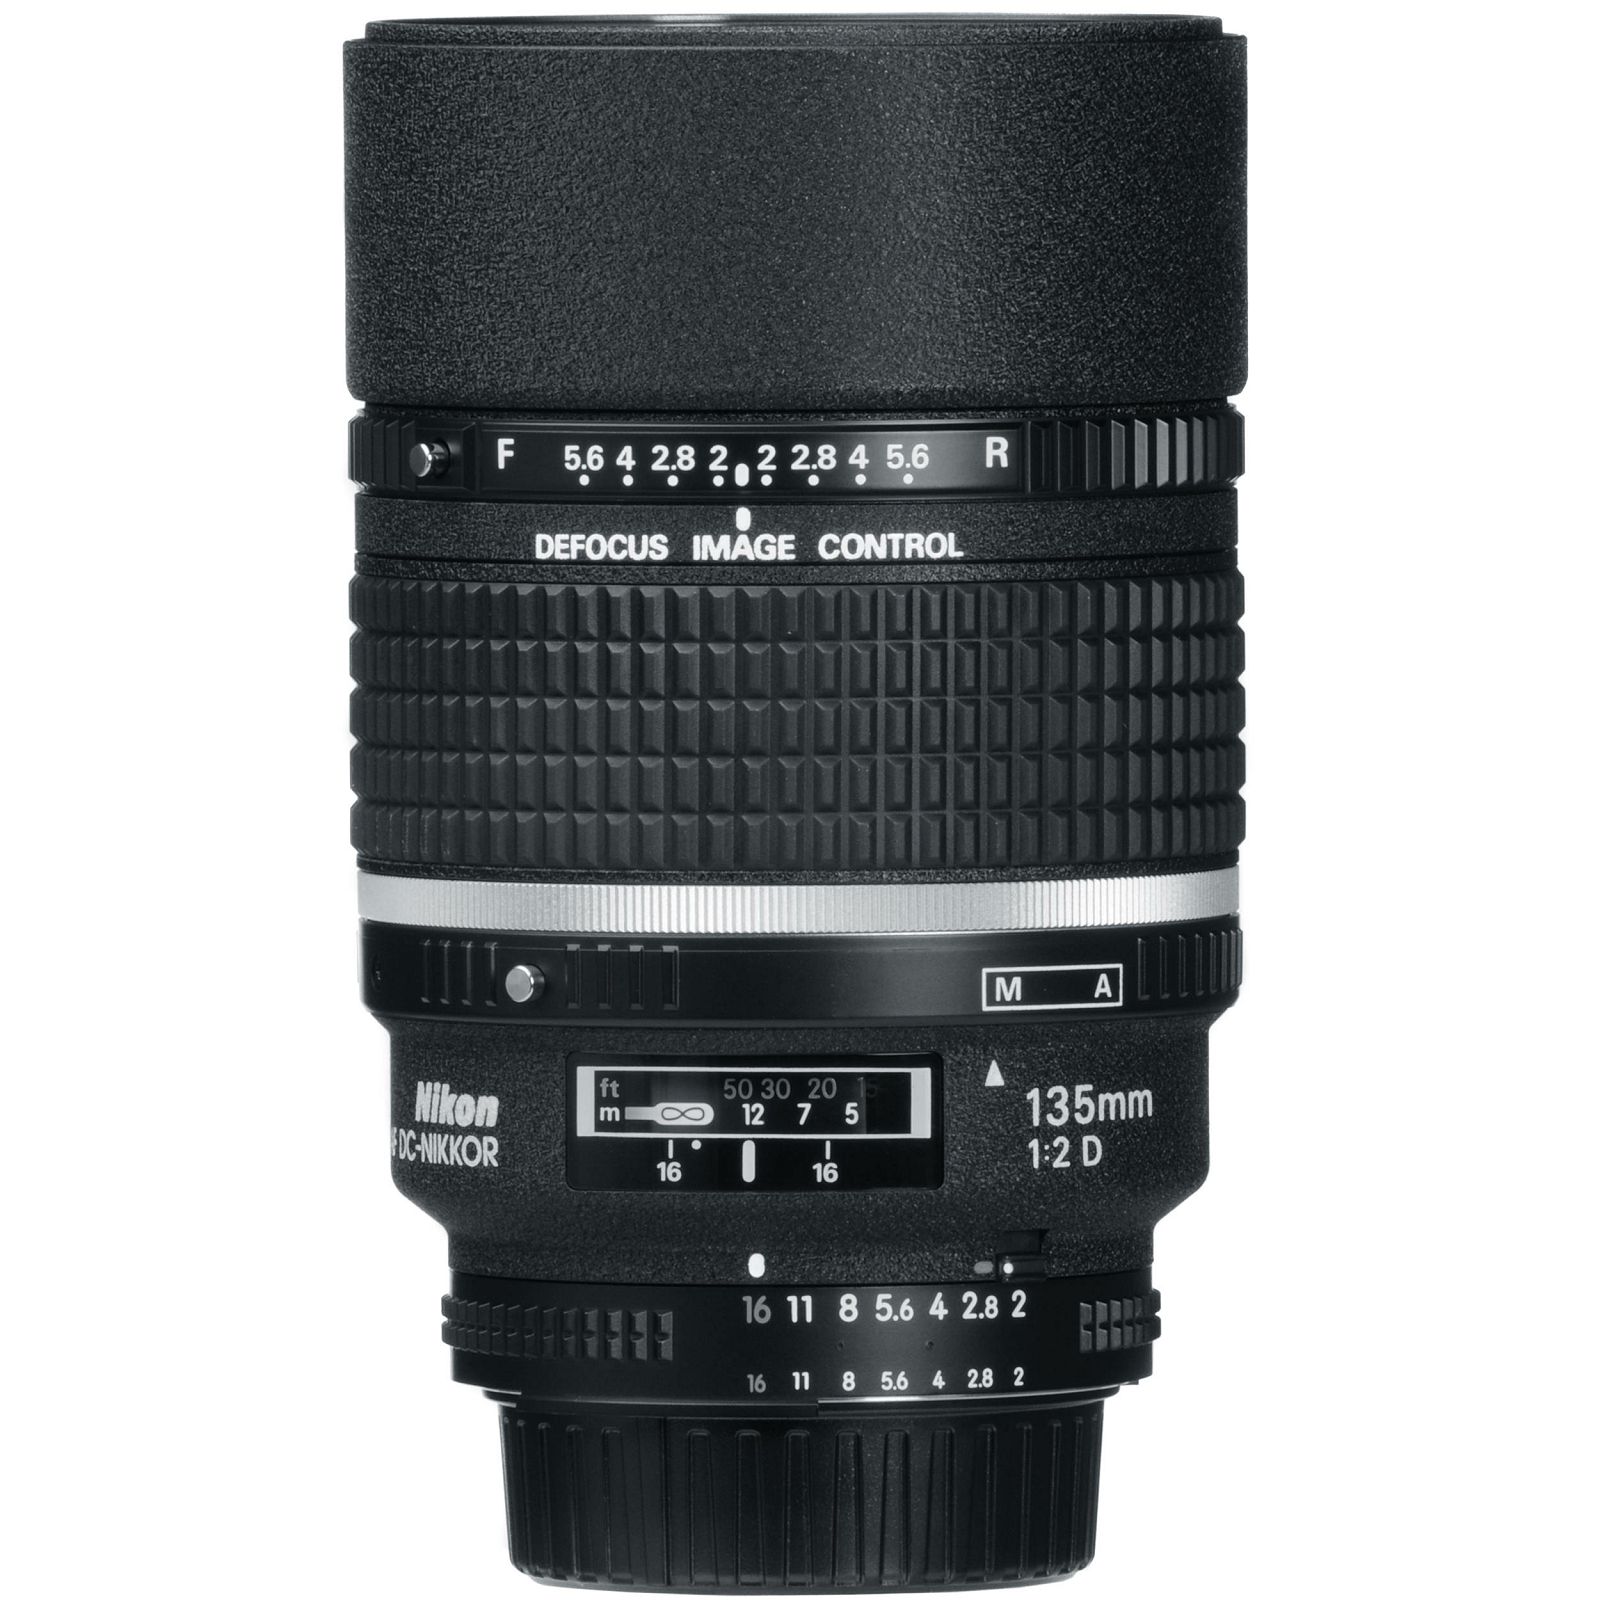 Nikon AF DC 135mm f/2D FX Portretni telefoto objektiv fiksne žarišne duljine Nikkor auto focus prime lens 135 f/2.0 F2D f/2 D (JAA329DA)